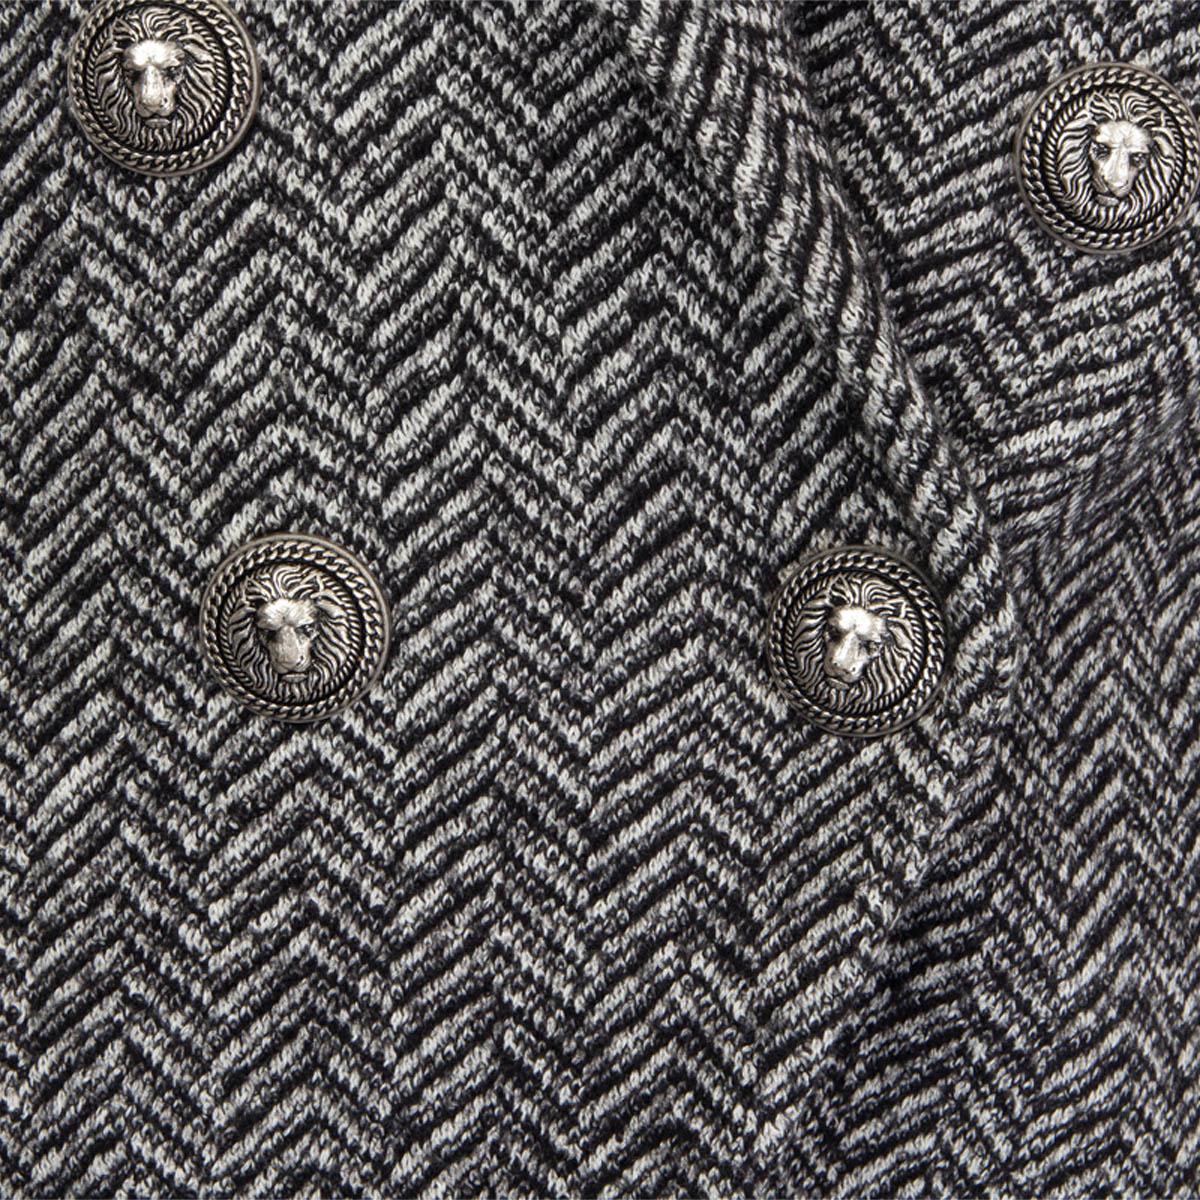 Women's BALMAIN grey HERRINGBONE TWEED SIGNATURE DOUBLE BREASTED Blazer Jacket 36 XS